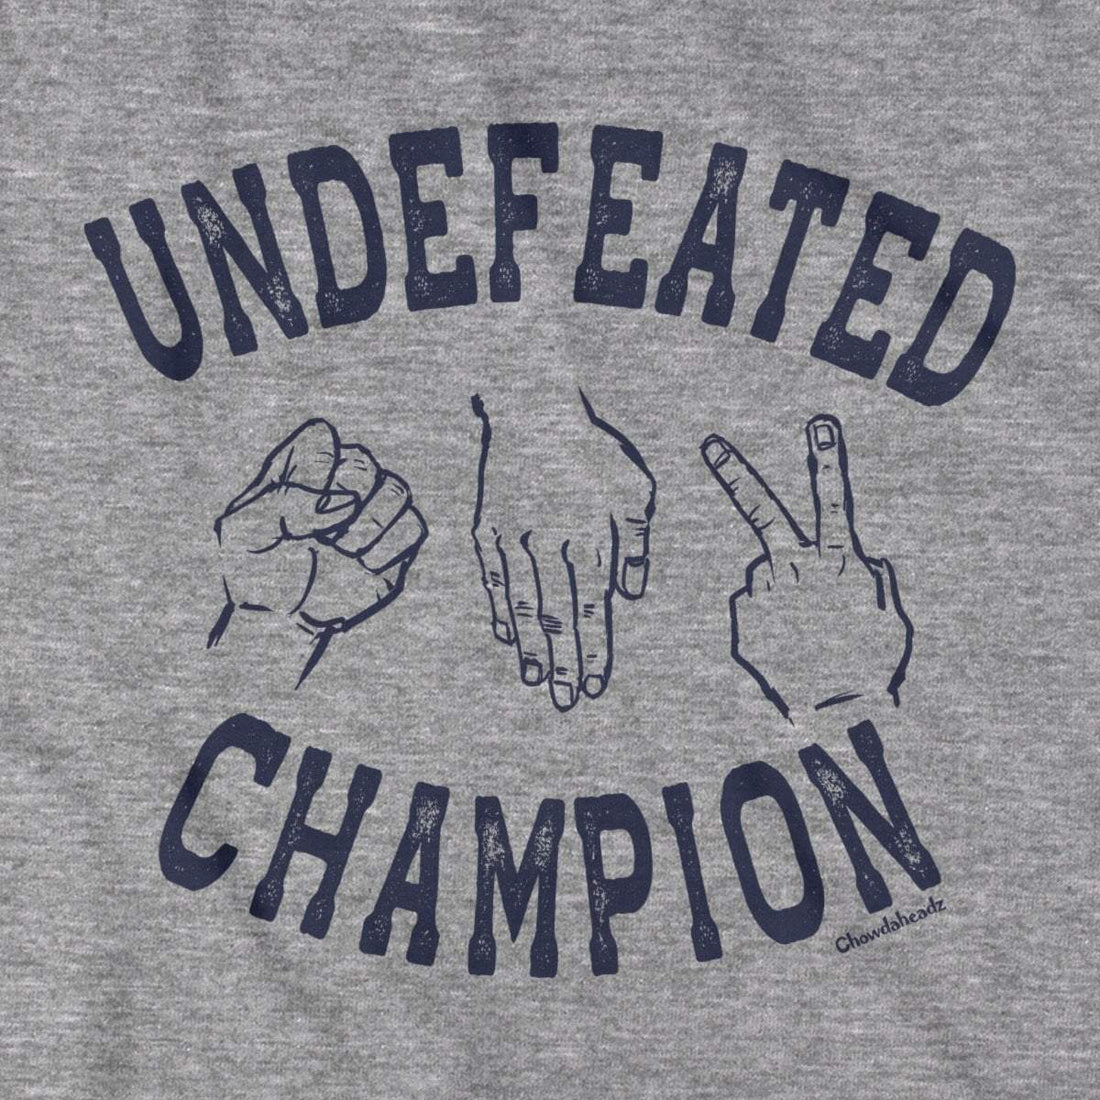 Undefeated Rock Paper Scissors Champion T-Shirt - Chowdaheadz